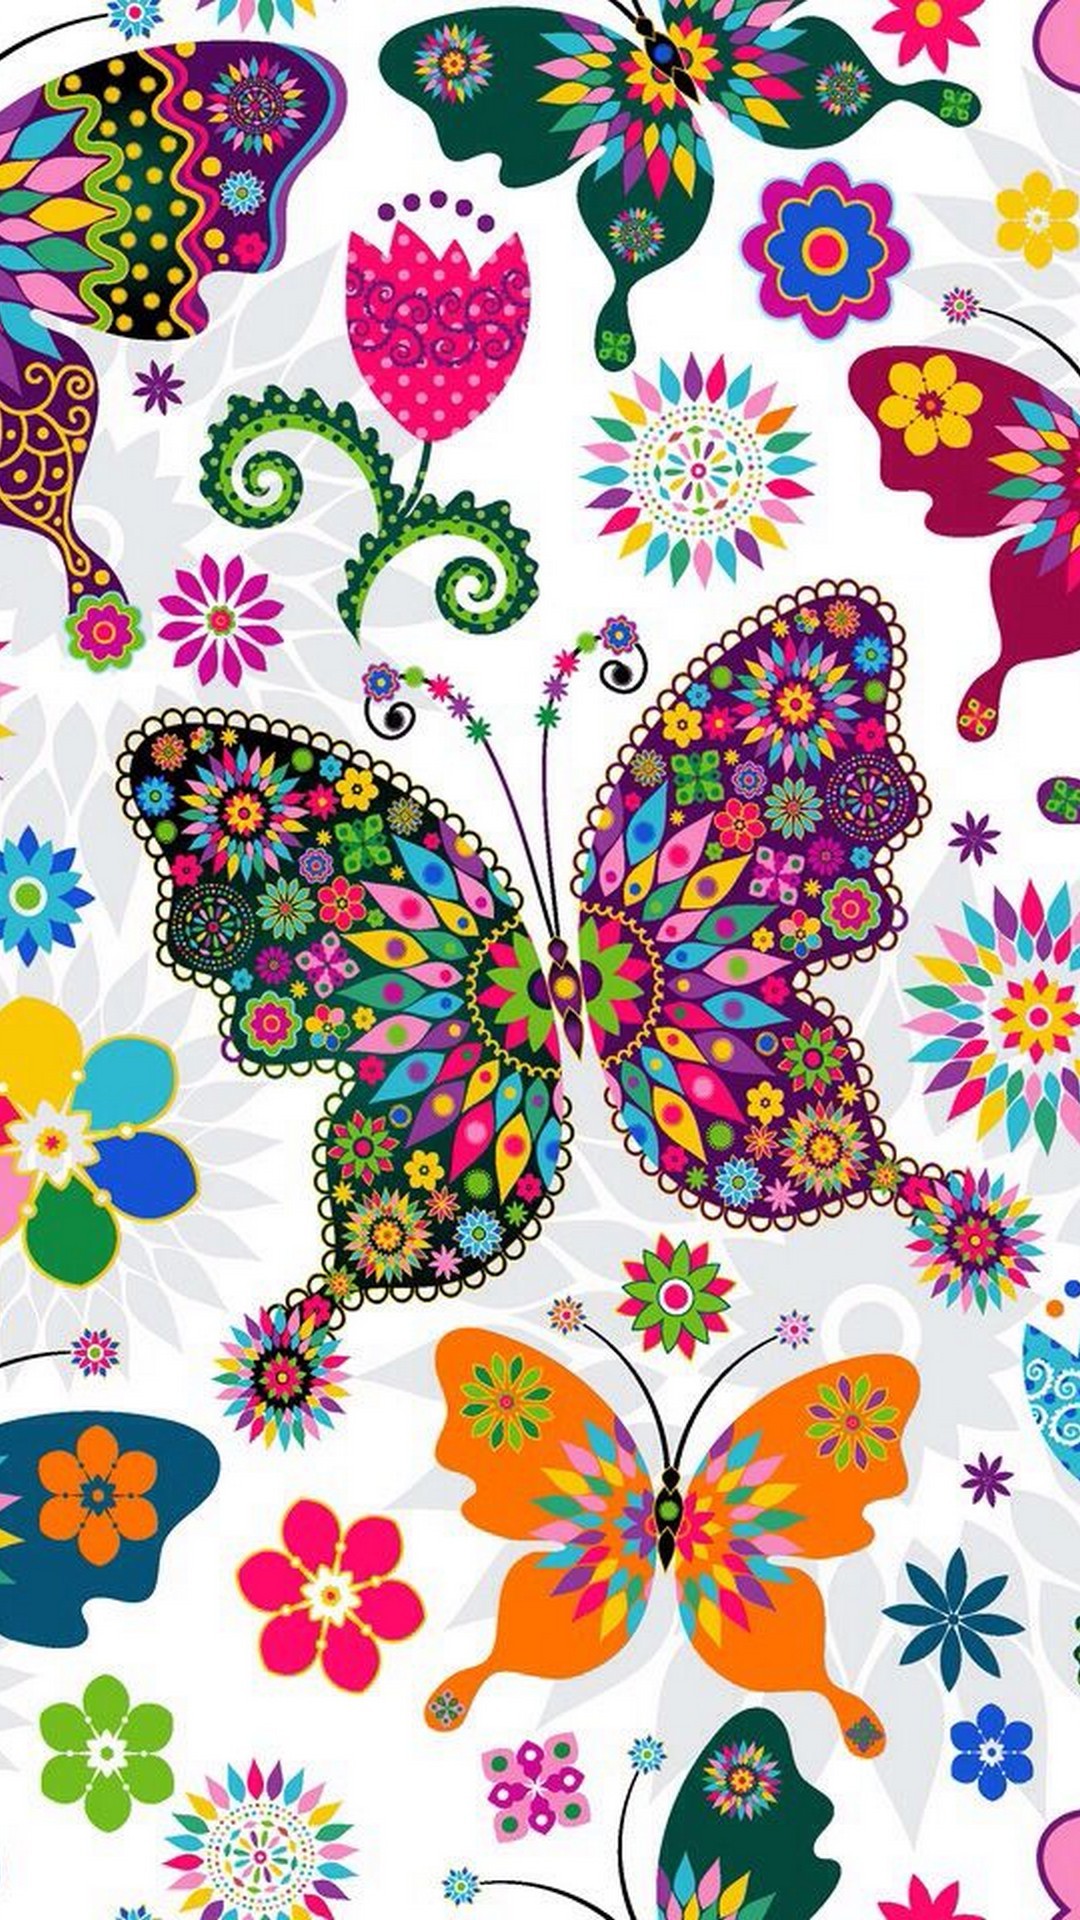 iPhone Wallpaper Butterfly Design resolution 1080x1920